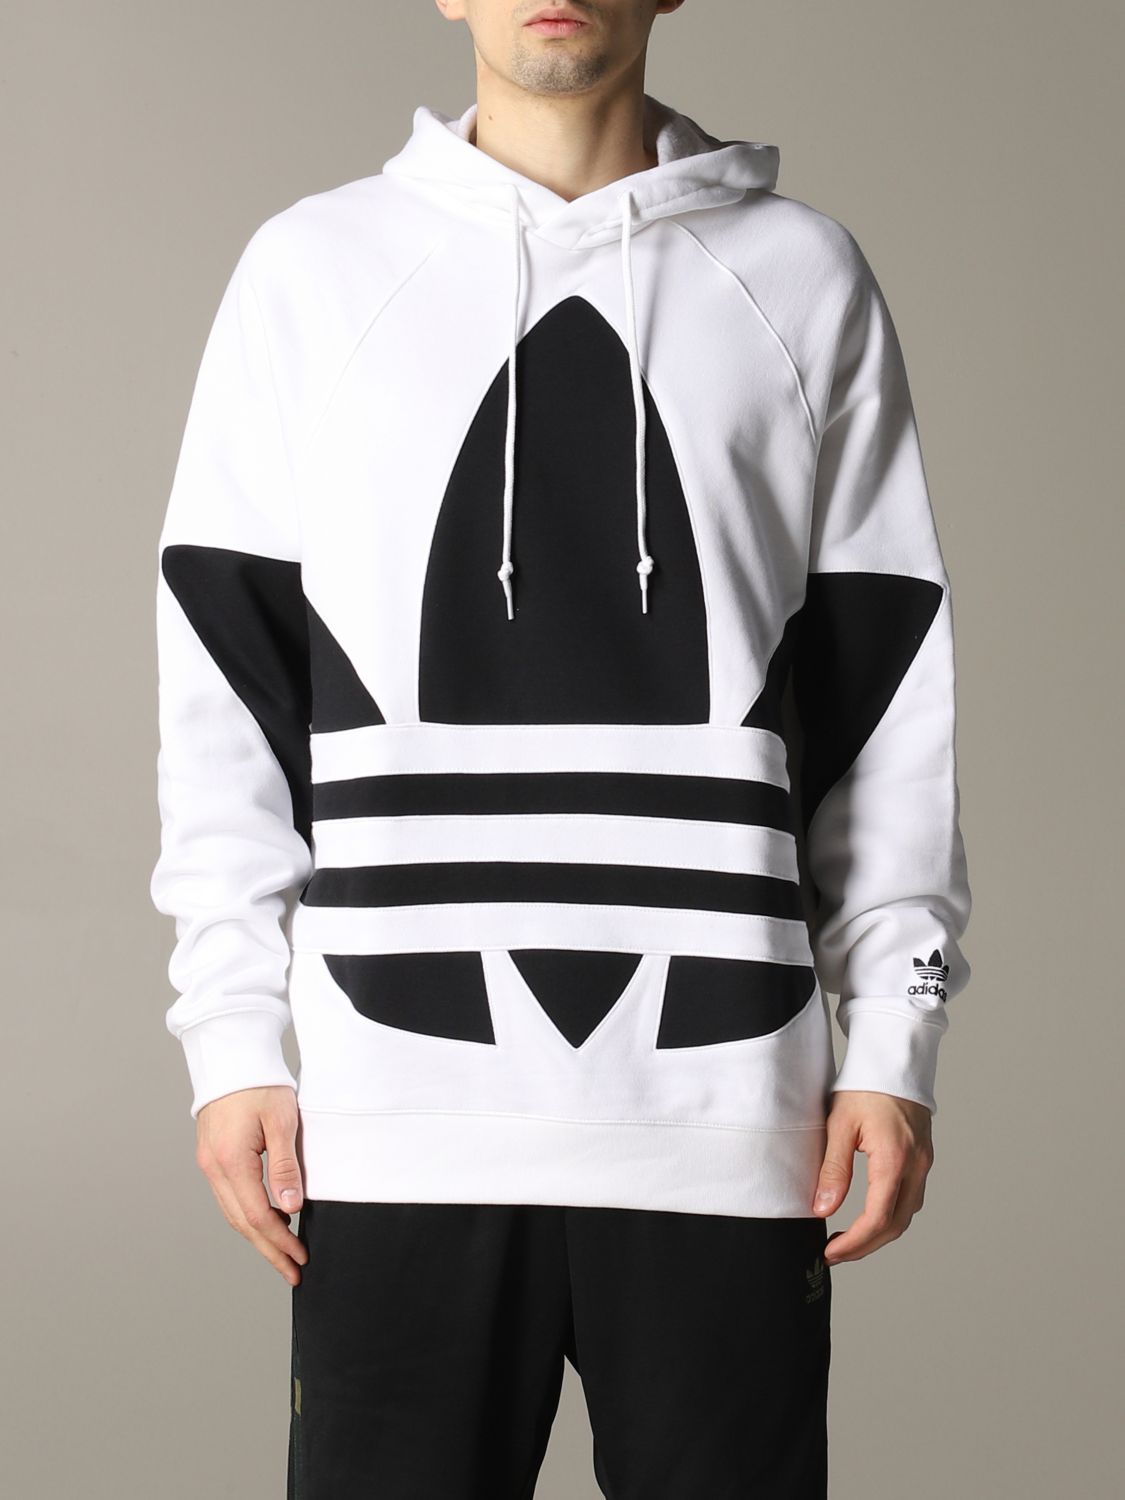 Heel Verhandeling Vel ADIDAS ORIGINALS: sweatshirt with hood and logo - White | Adidas Originals  sweatshirt FM9909 online on GIGLIO.COM